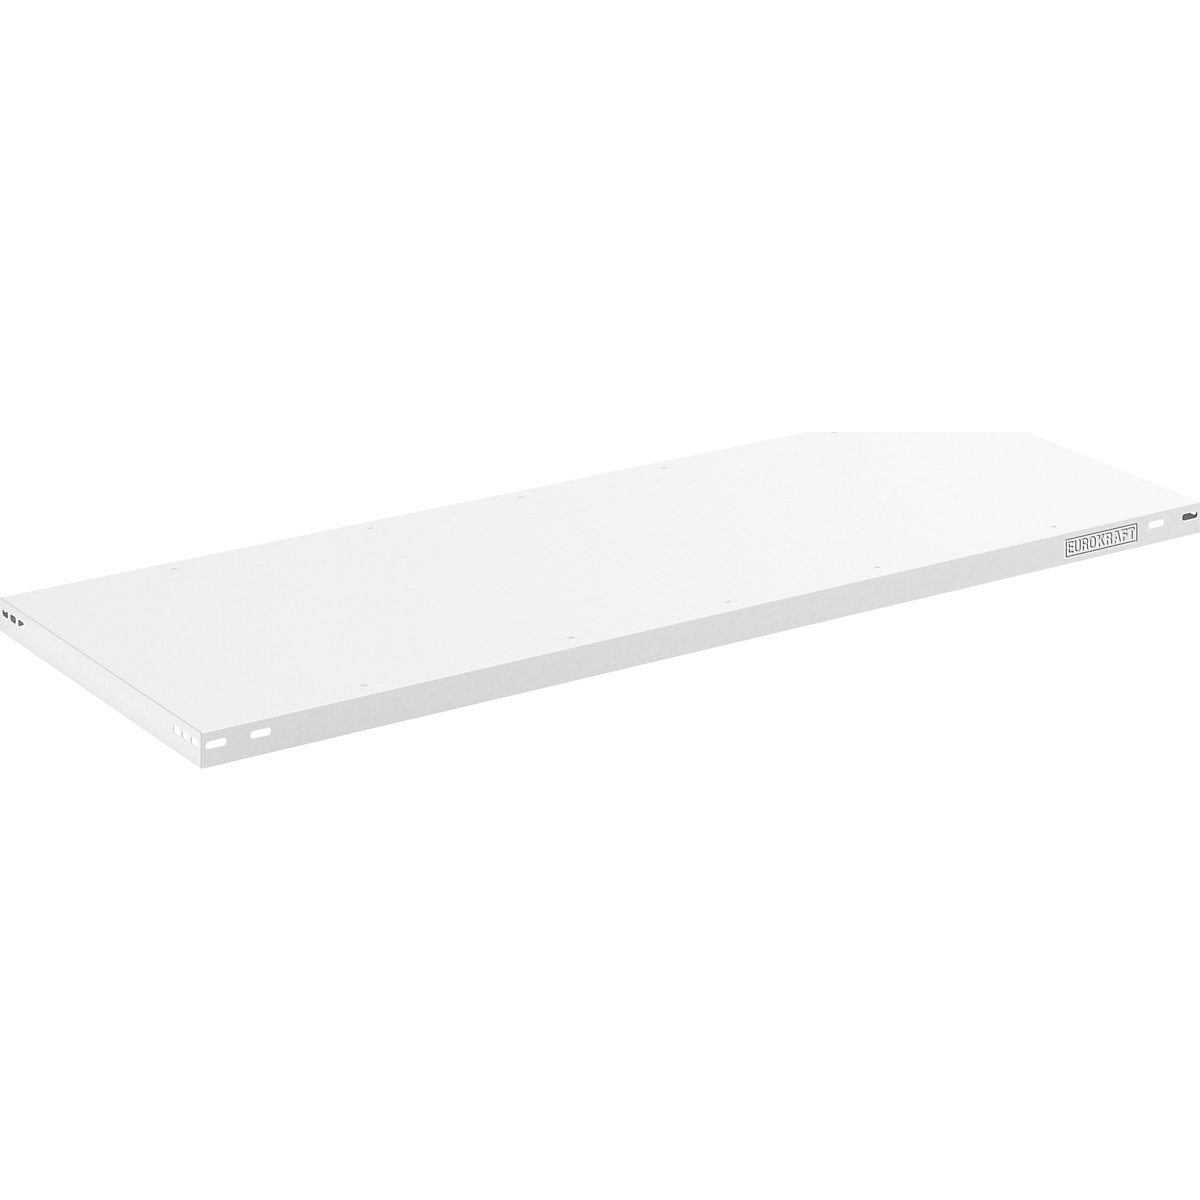 Shelf – eurokraft pro, plastic-coated, WxD 1300 x 600 mm